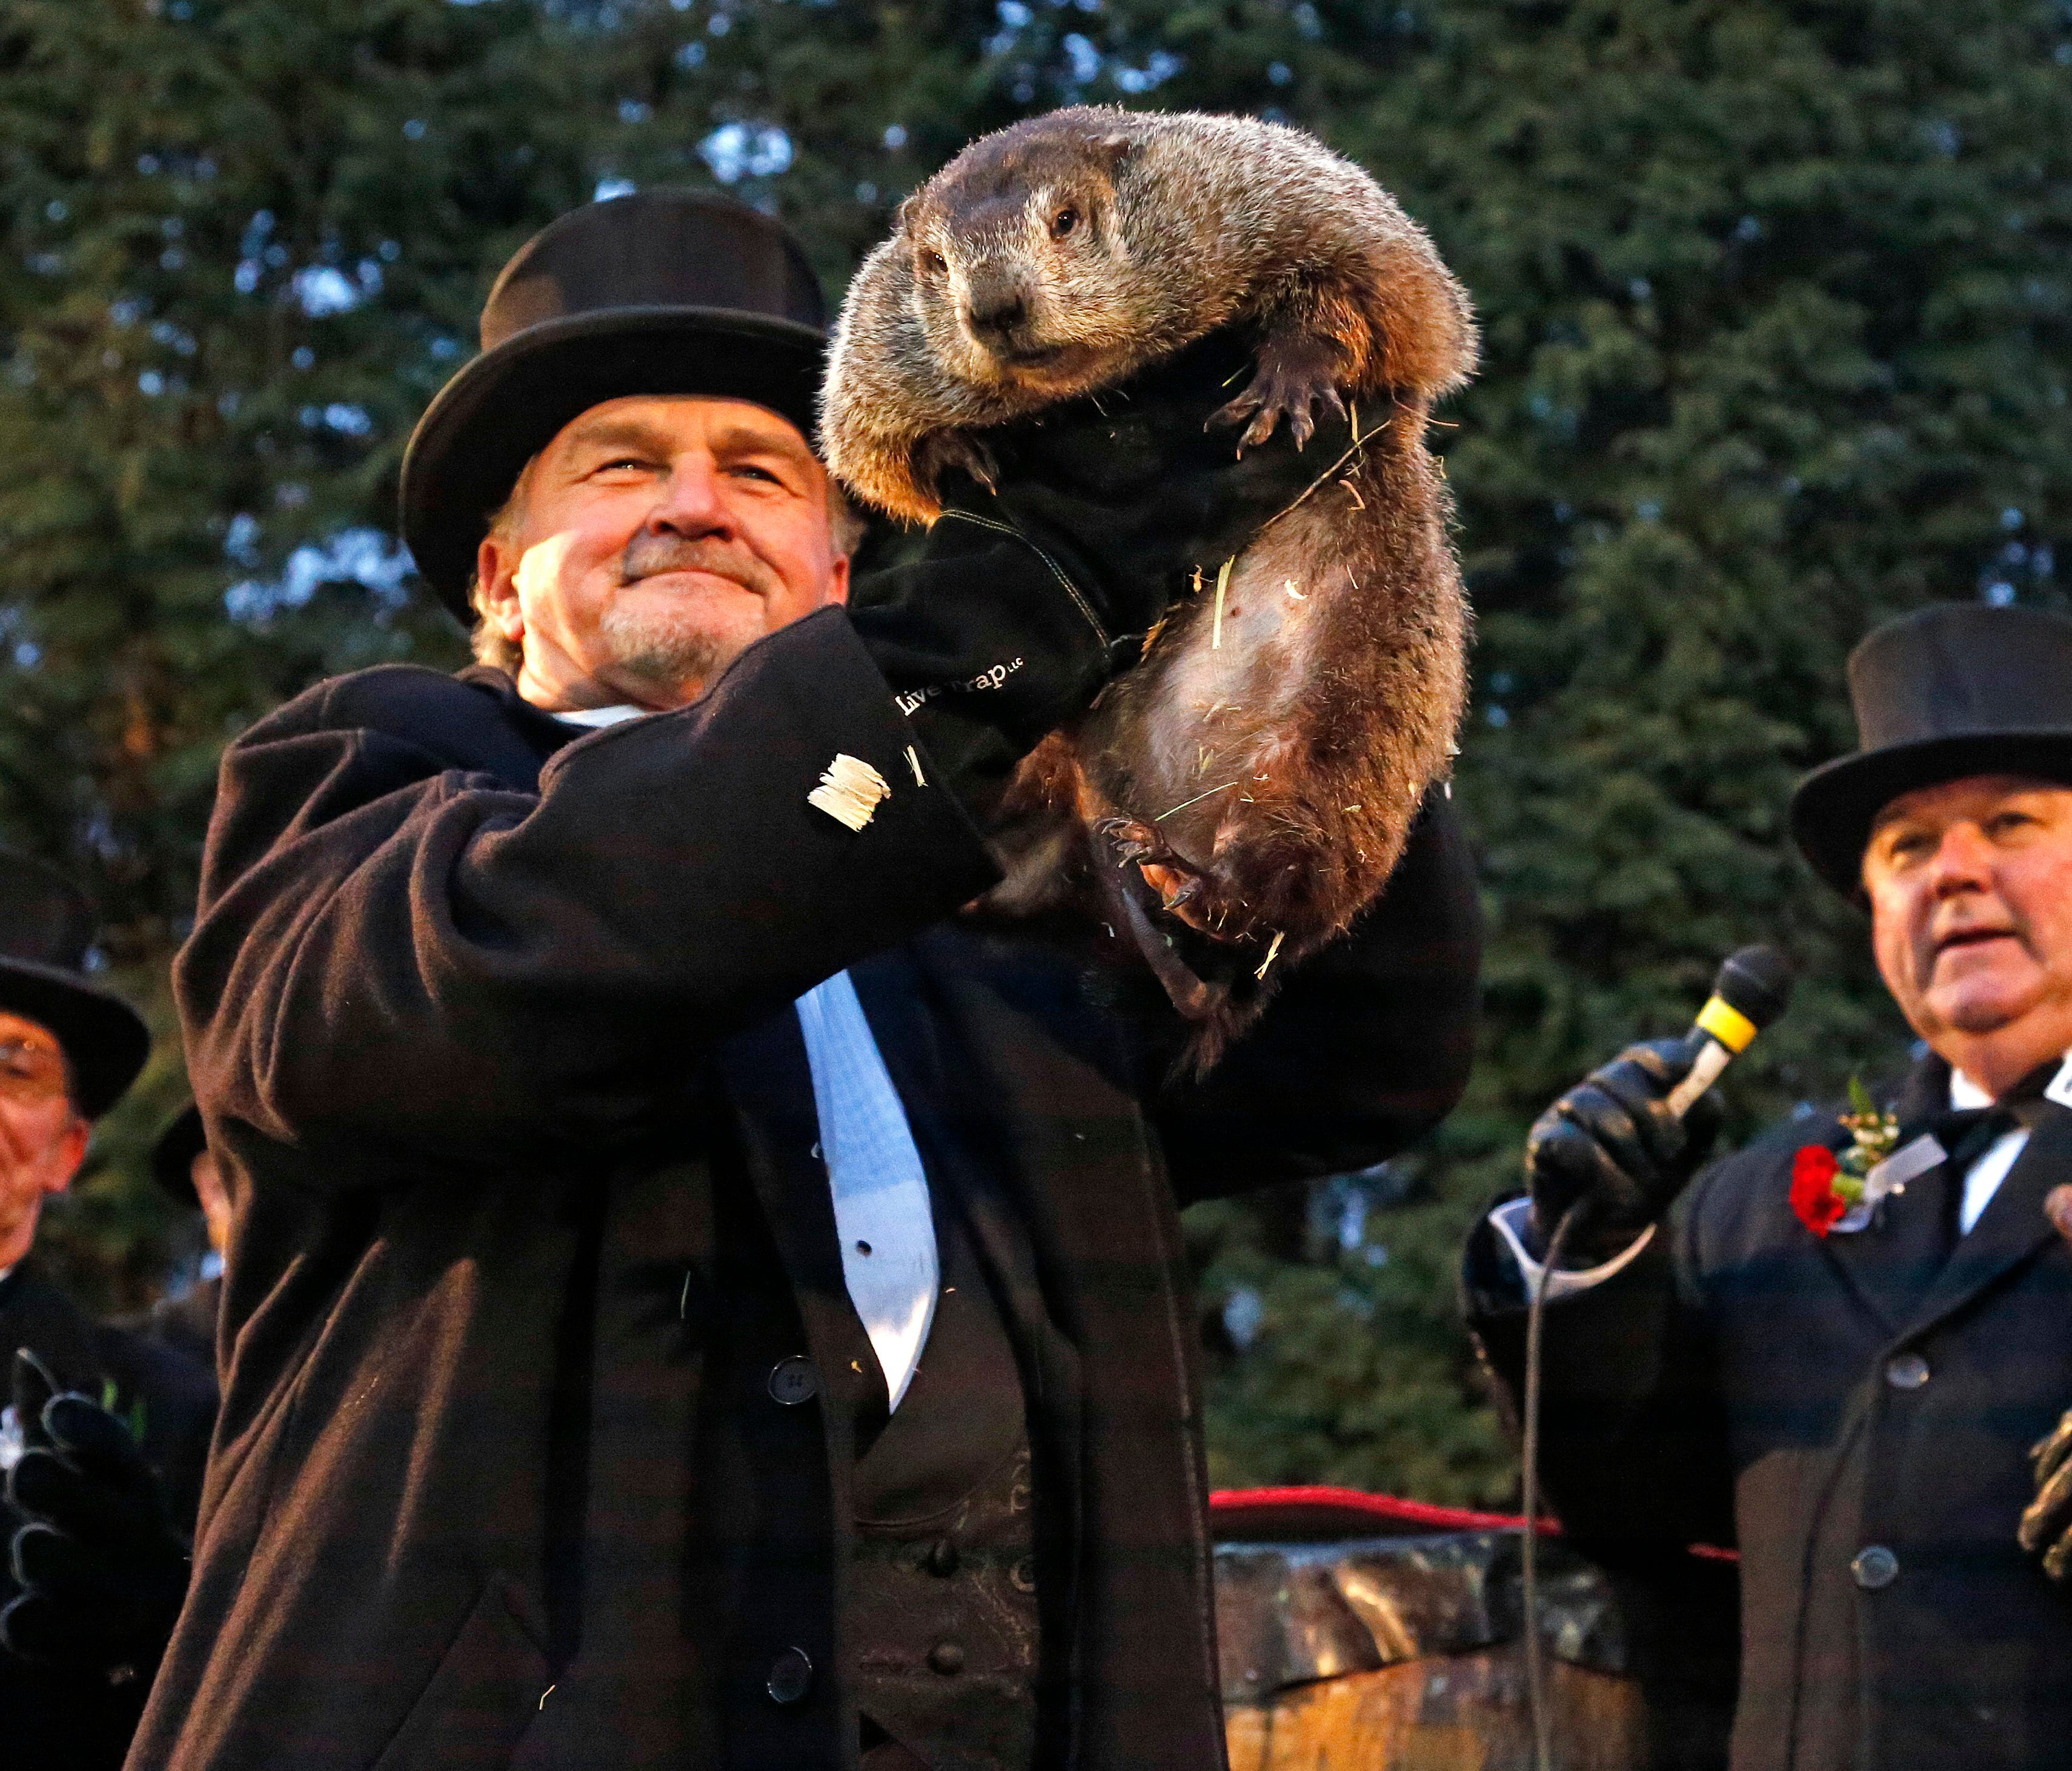 Groundhog Club handler John Griffiths, center, holds Punxsutawney Phil, the weather prognosticating groundhog, during the 131st celebration of Groundhog Day on Gobbler's Knob.